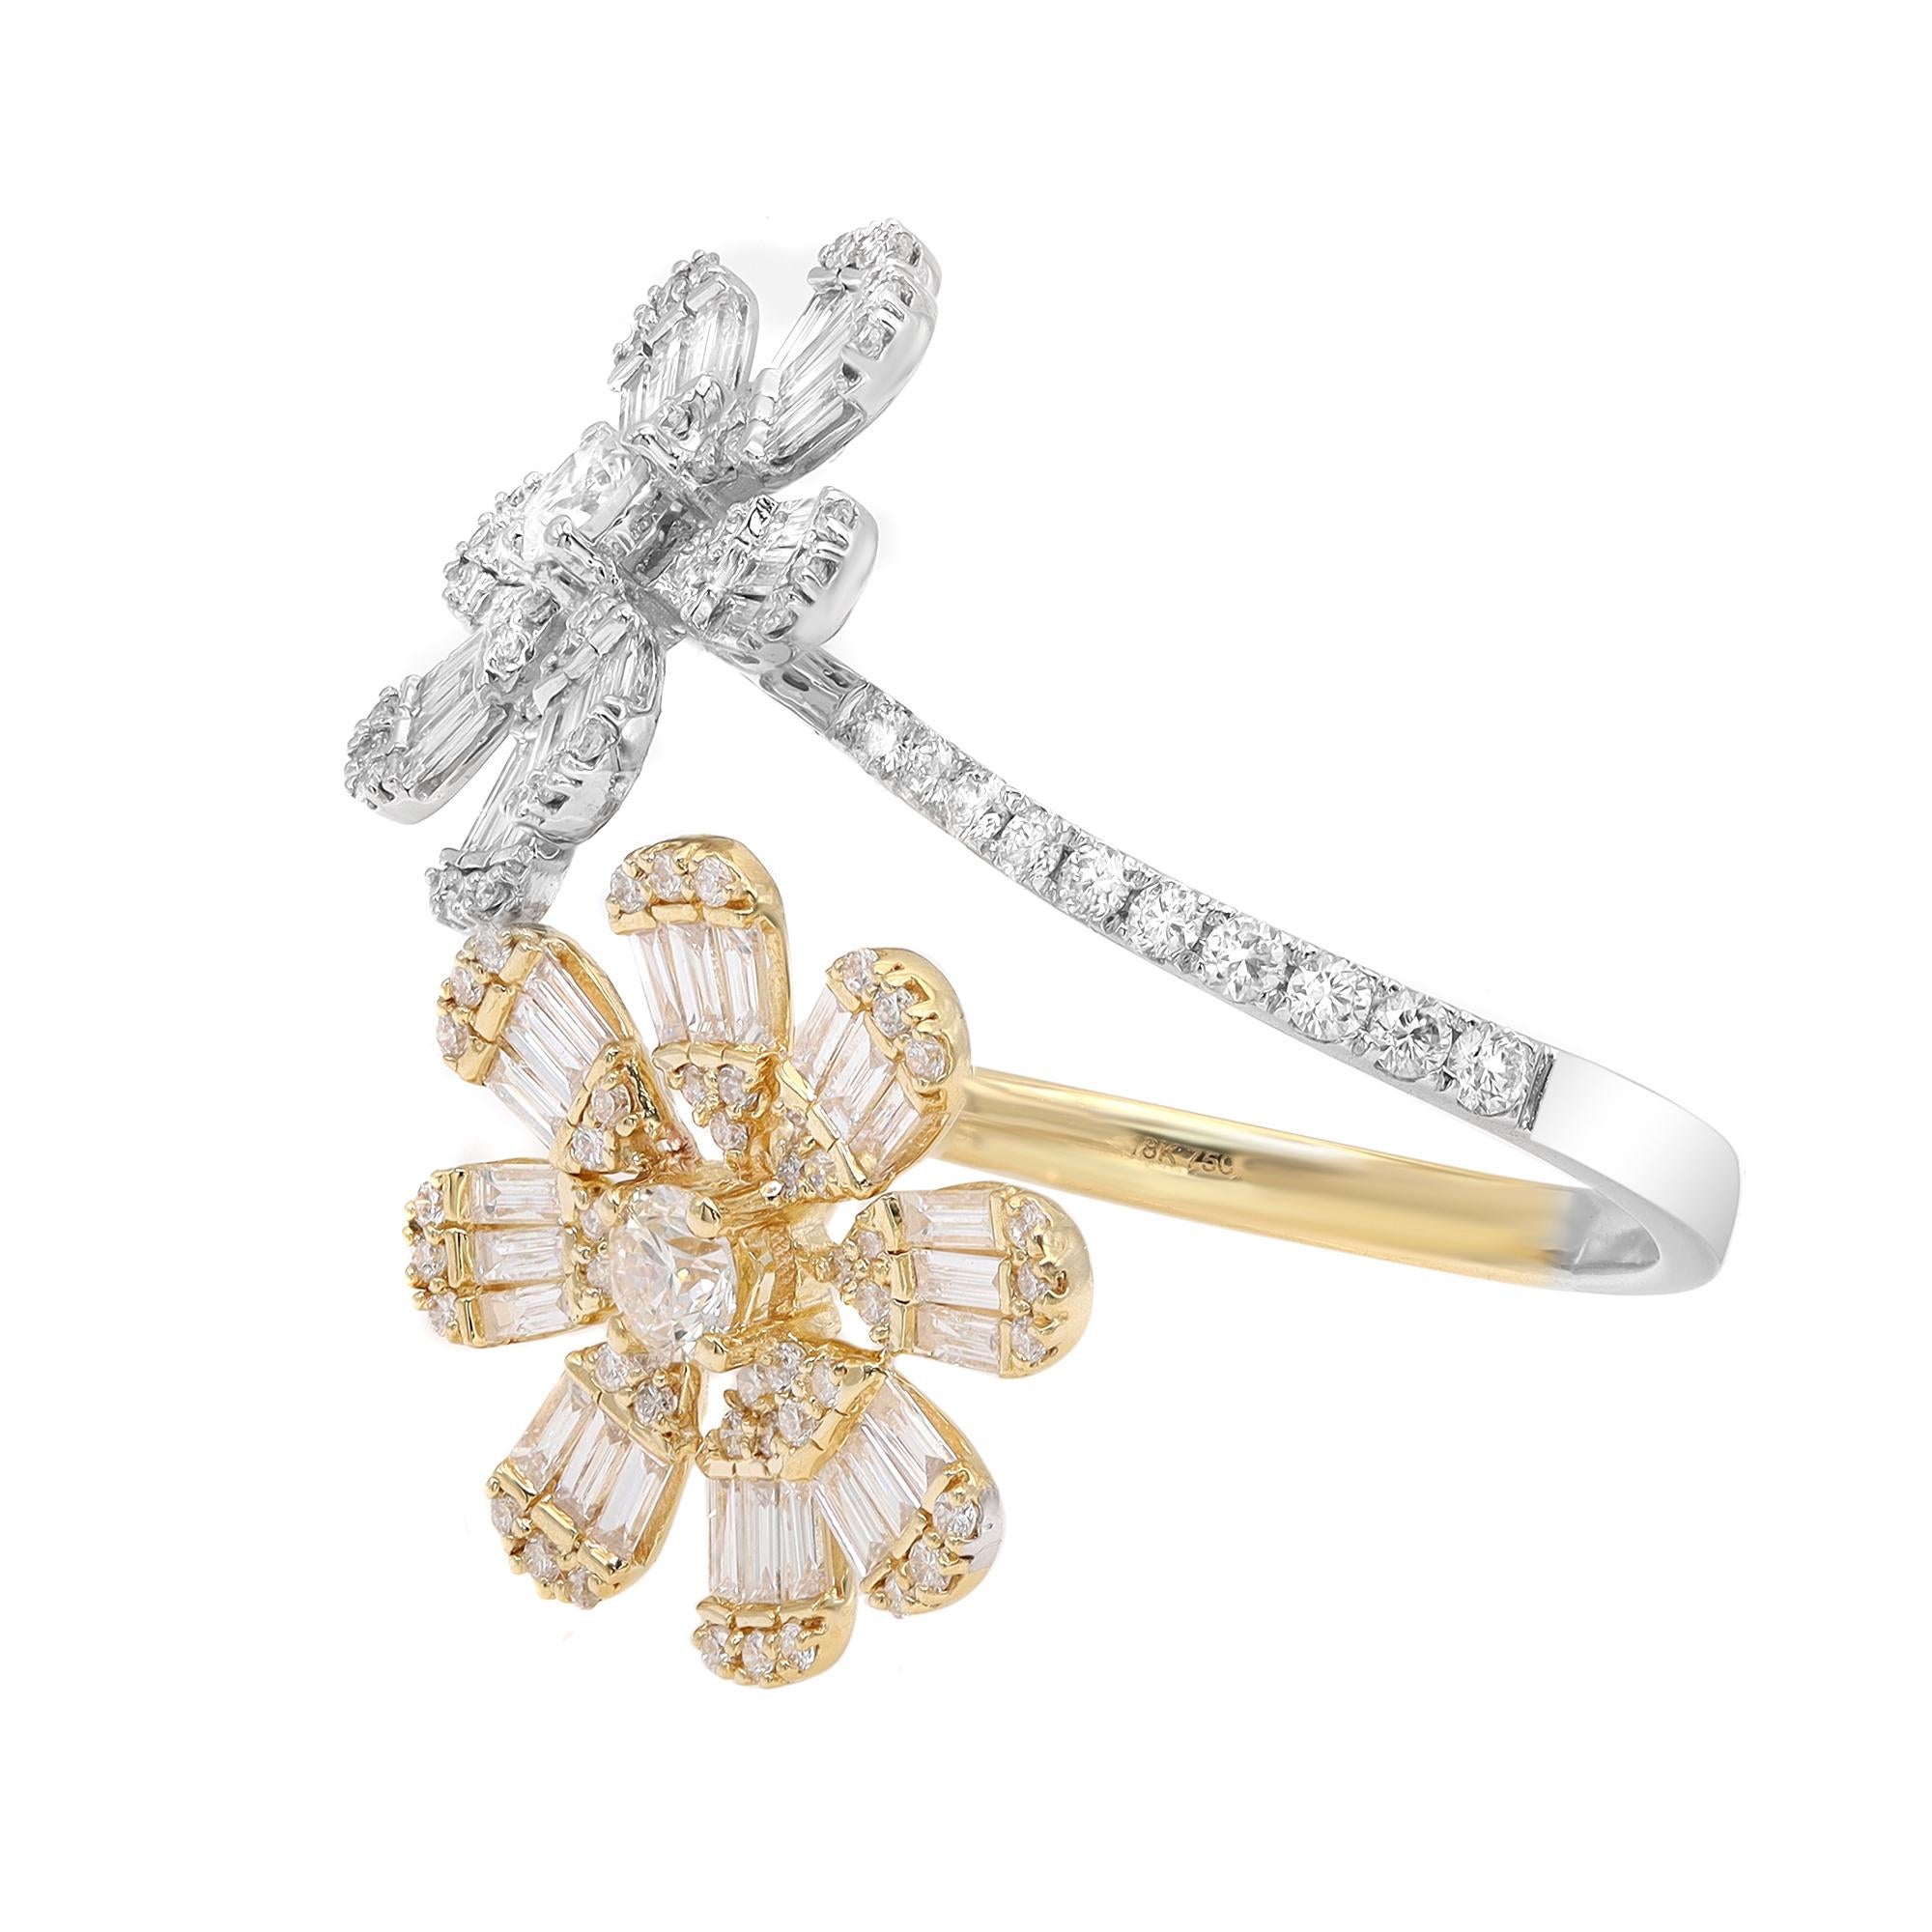 Modern Rachel Koen Diamond Criss Cross Flower Cocktail Ring 18K Gold 1.56cttw For Sale